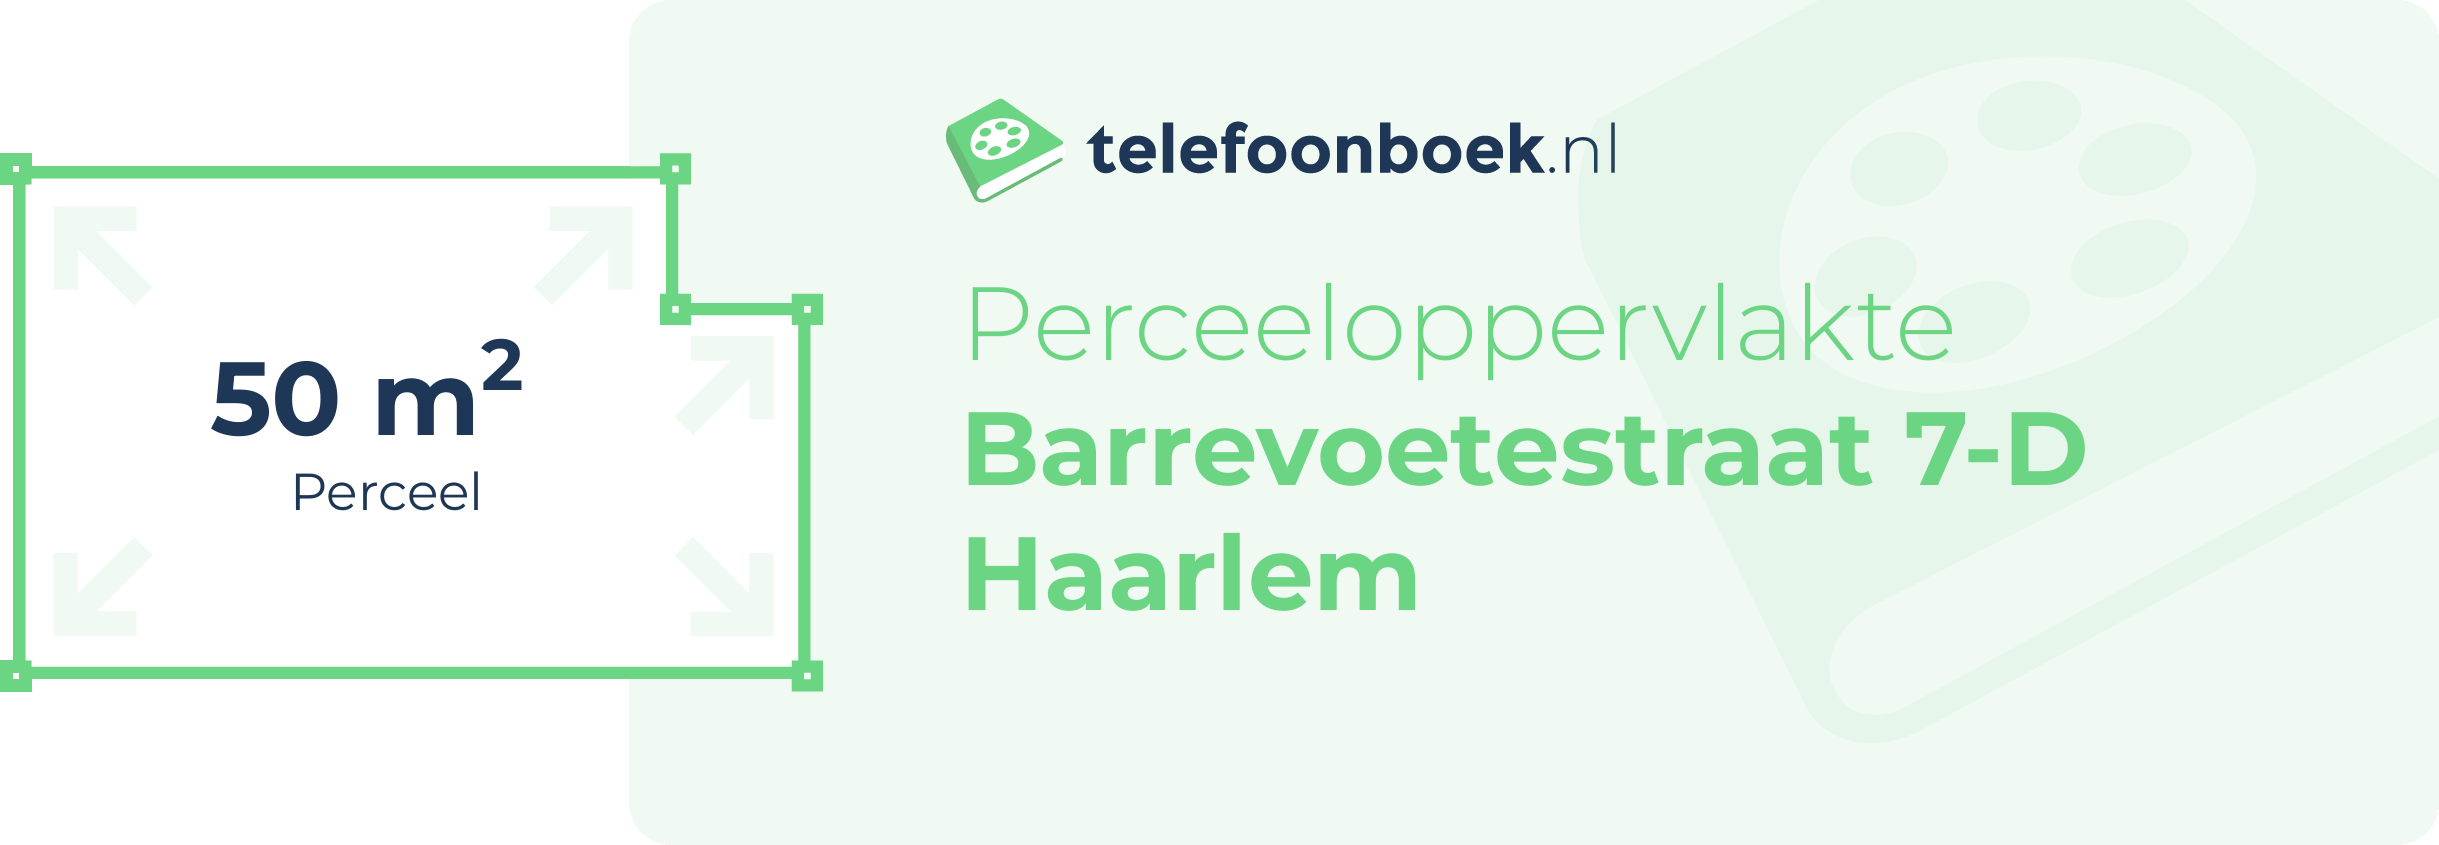 Perceeloppervlakte Barrevoetestraat 7-D Haarlem